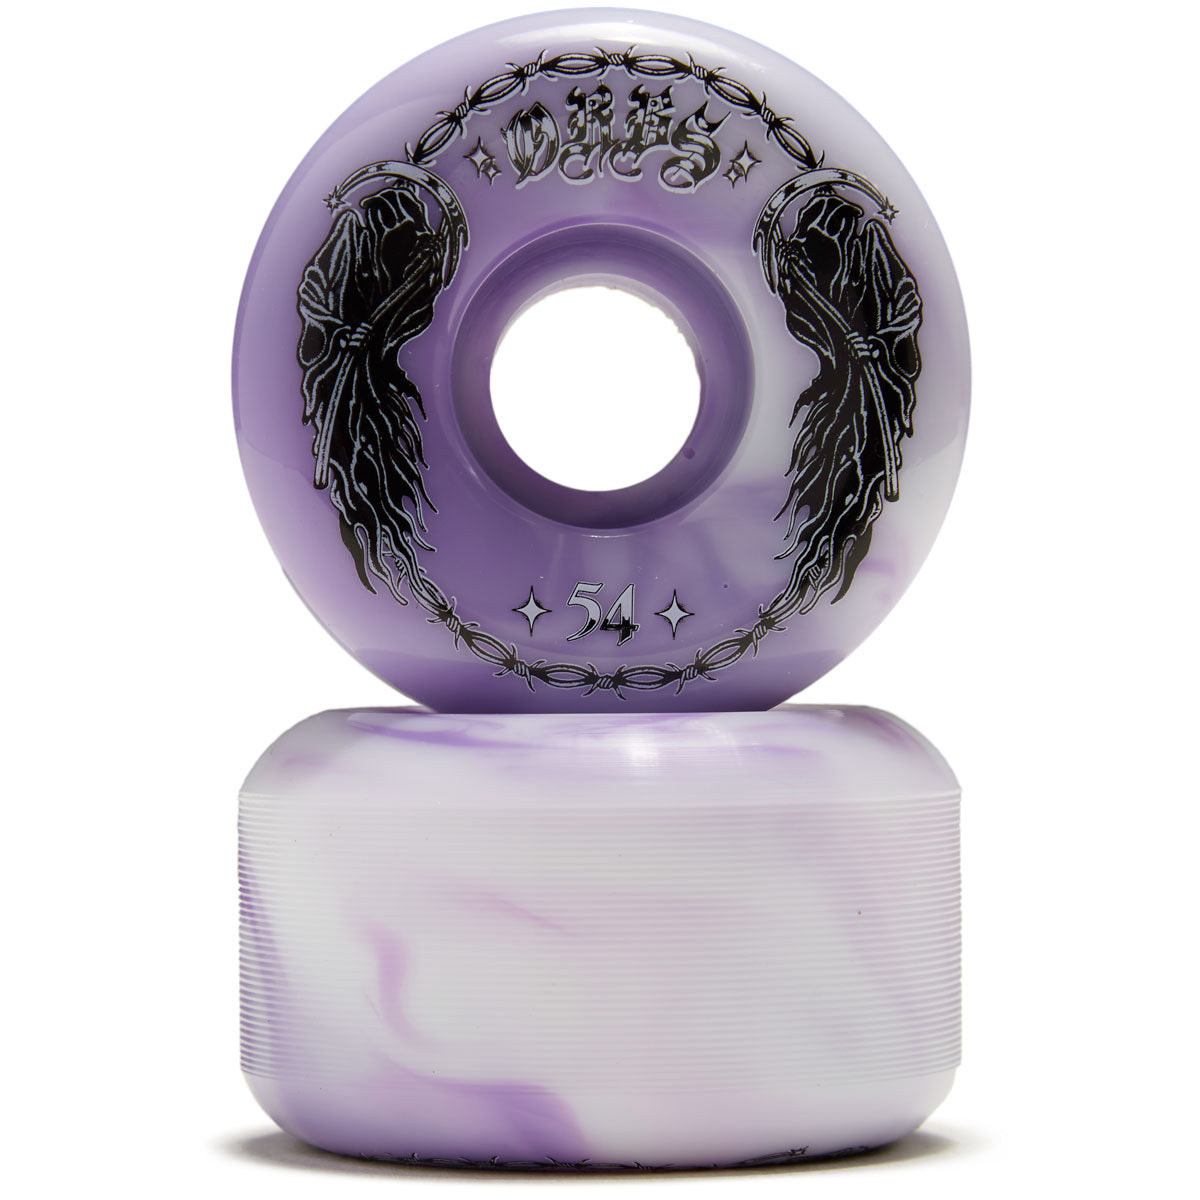 Welcome Orbs Specters '23 Conical 99A Skateboard Wheels - Purple/White Swirl - 54mm image 2